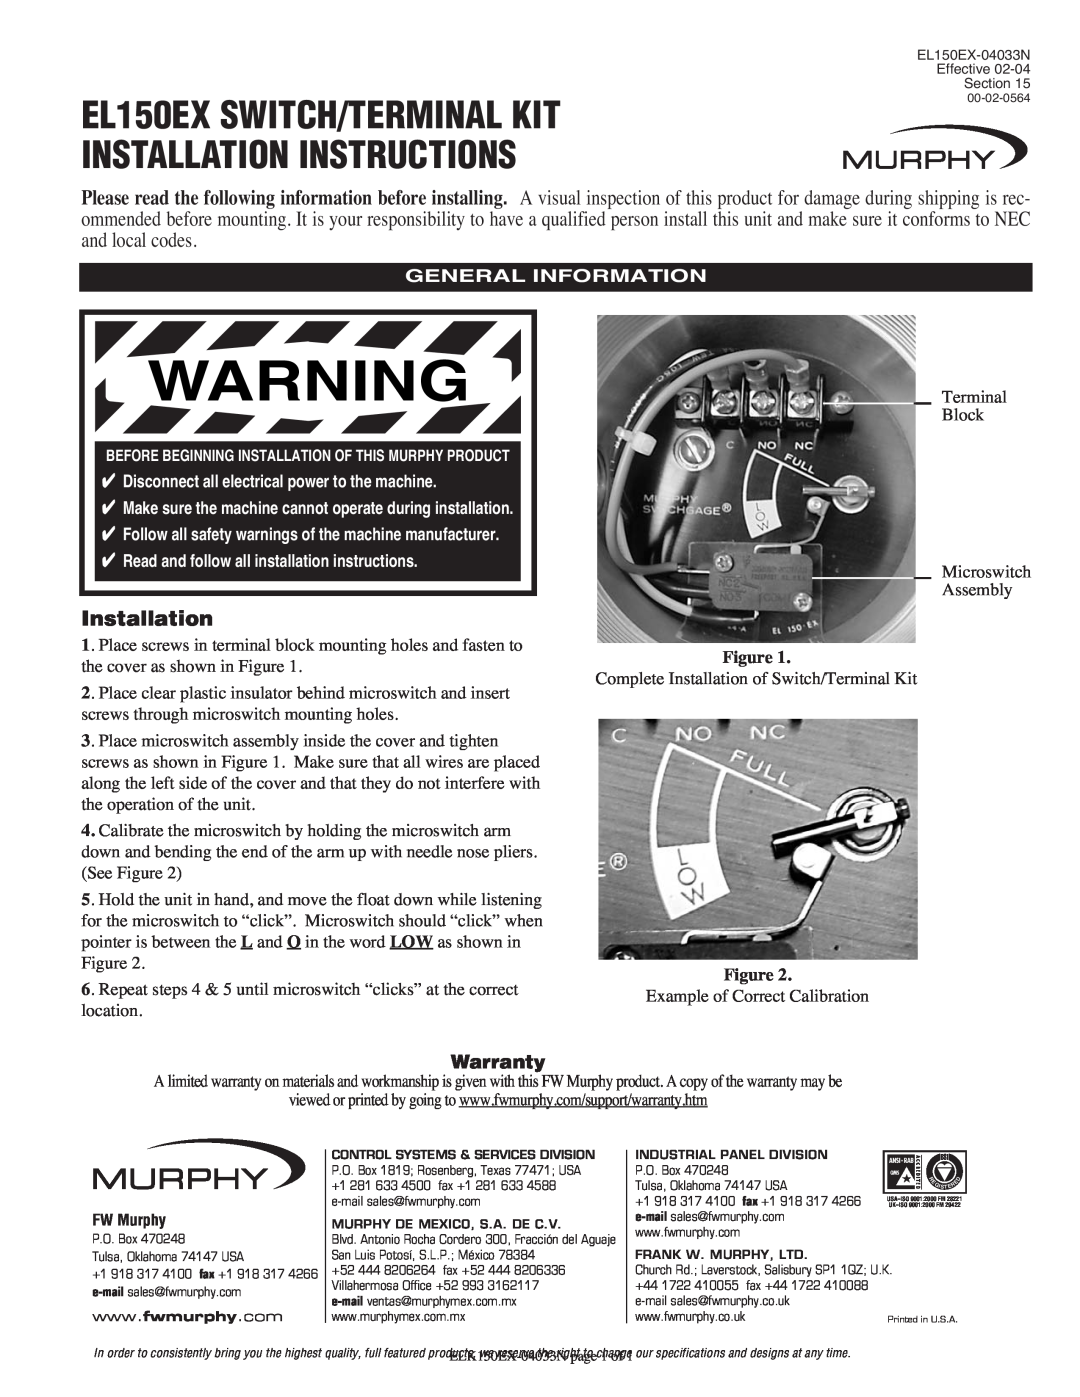 Murphy warranty EL150EX SWITCH/TERMINAL KIT INSTALLATION INSTRUCTIONS, Installation, Warranty, General Information 